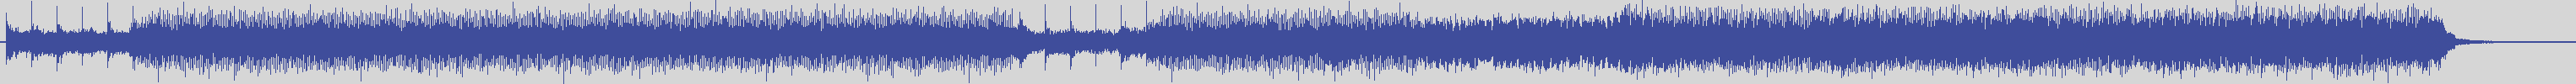 upr [UPR010] Distel - Che [Original Mix] audio wave form